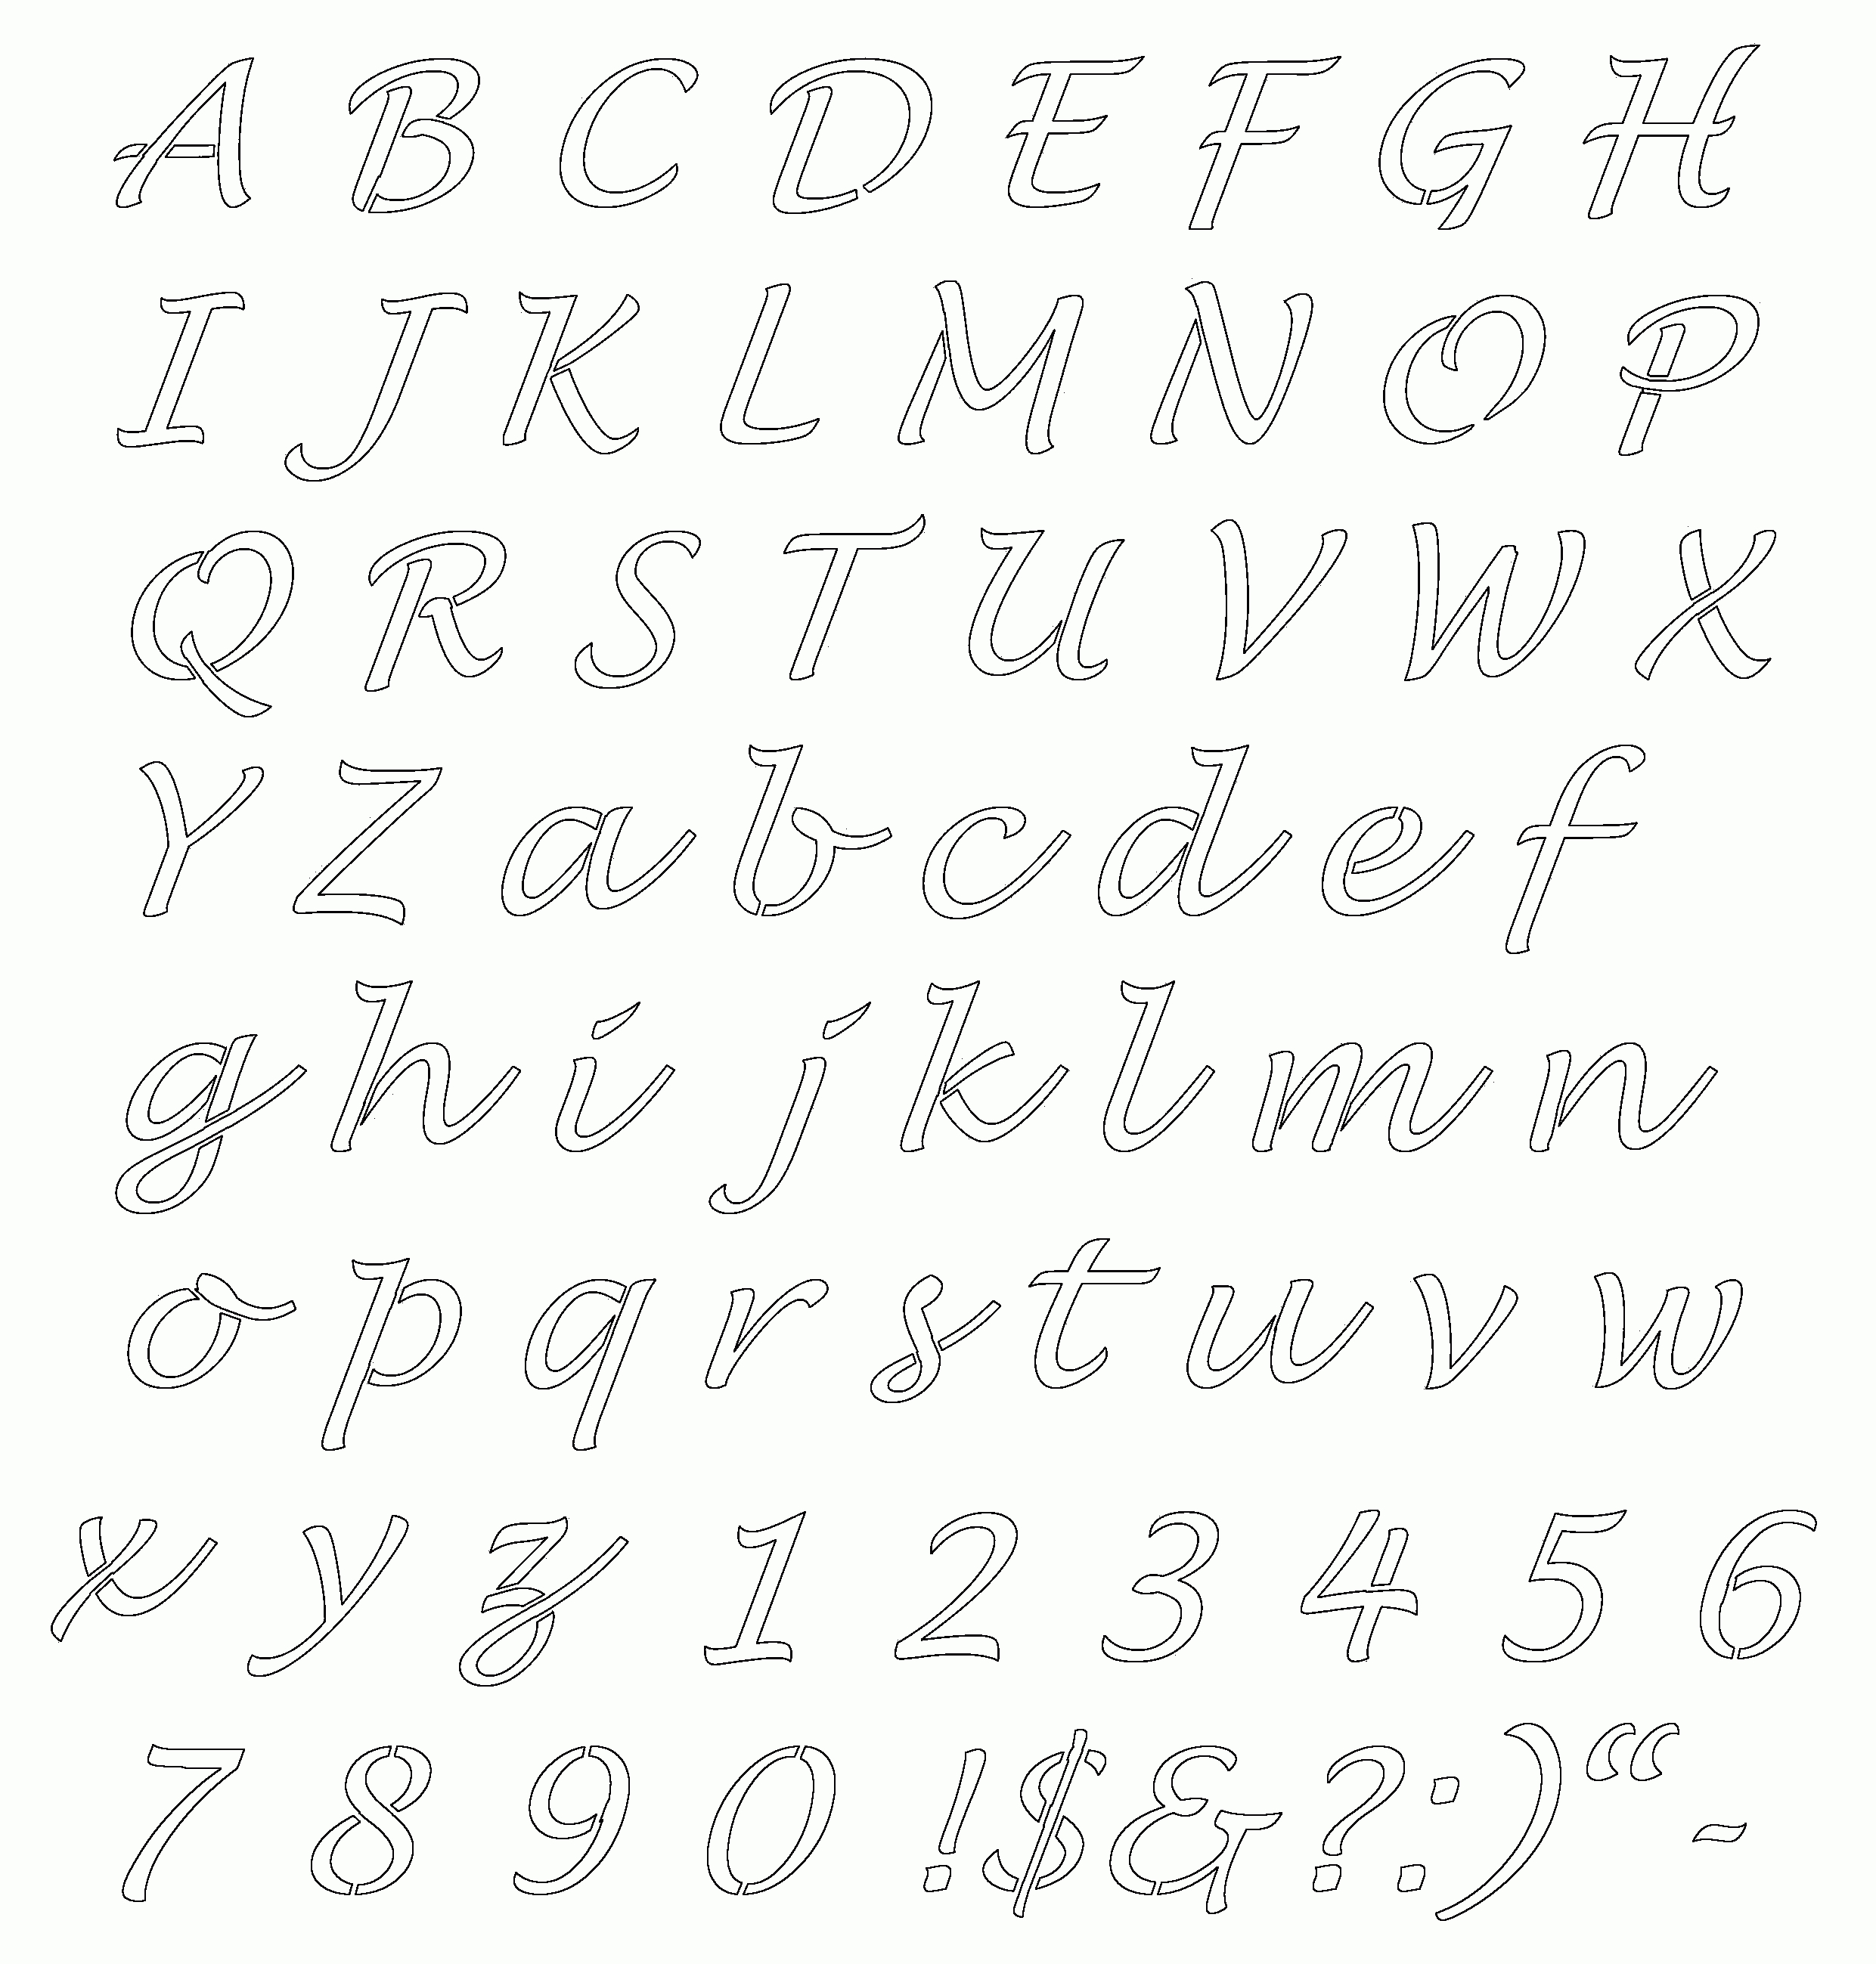 Free Online Alphabet Templates | Stencils Free Printable Alphabetaug - Template Letters Of The Alphabet For Free Printable